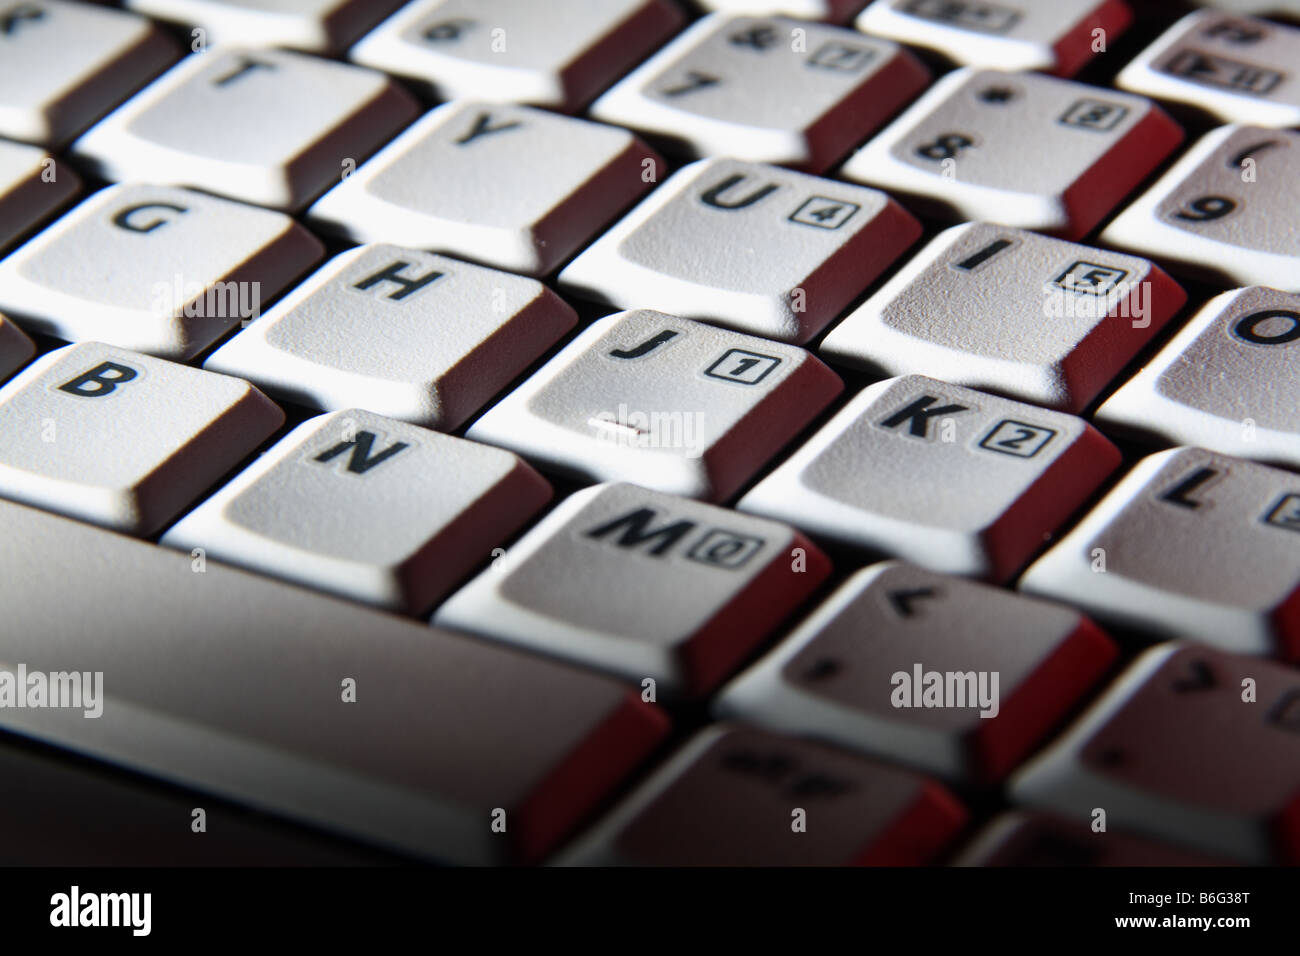 Close-up image of a keyboard Stock Photo